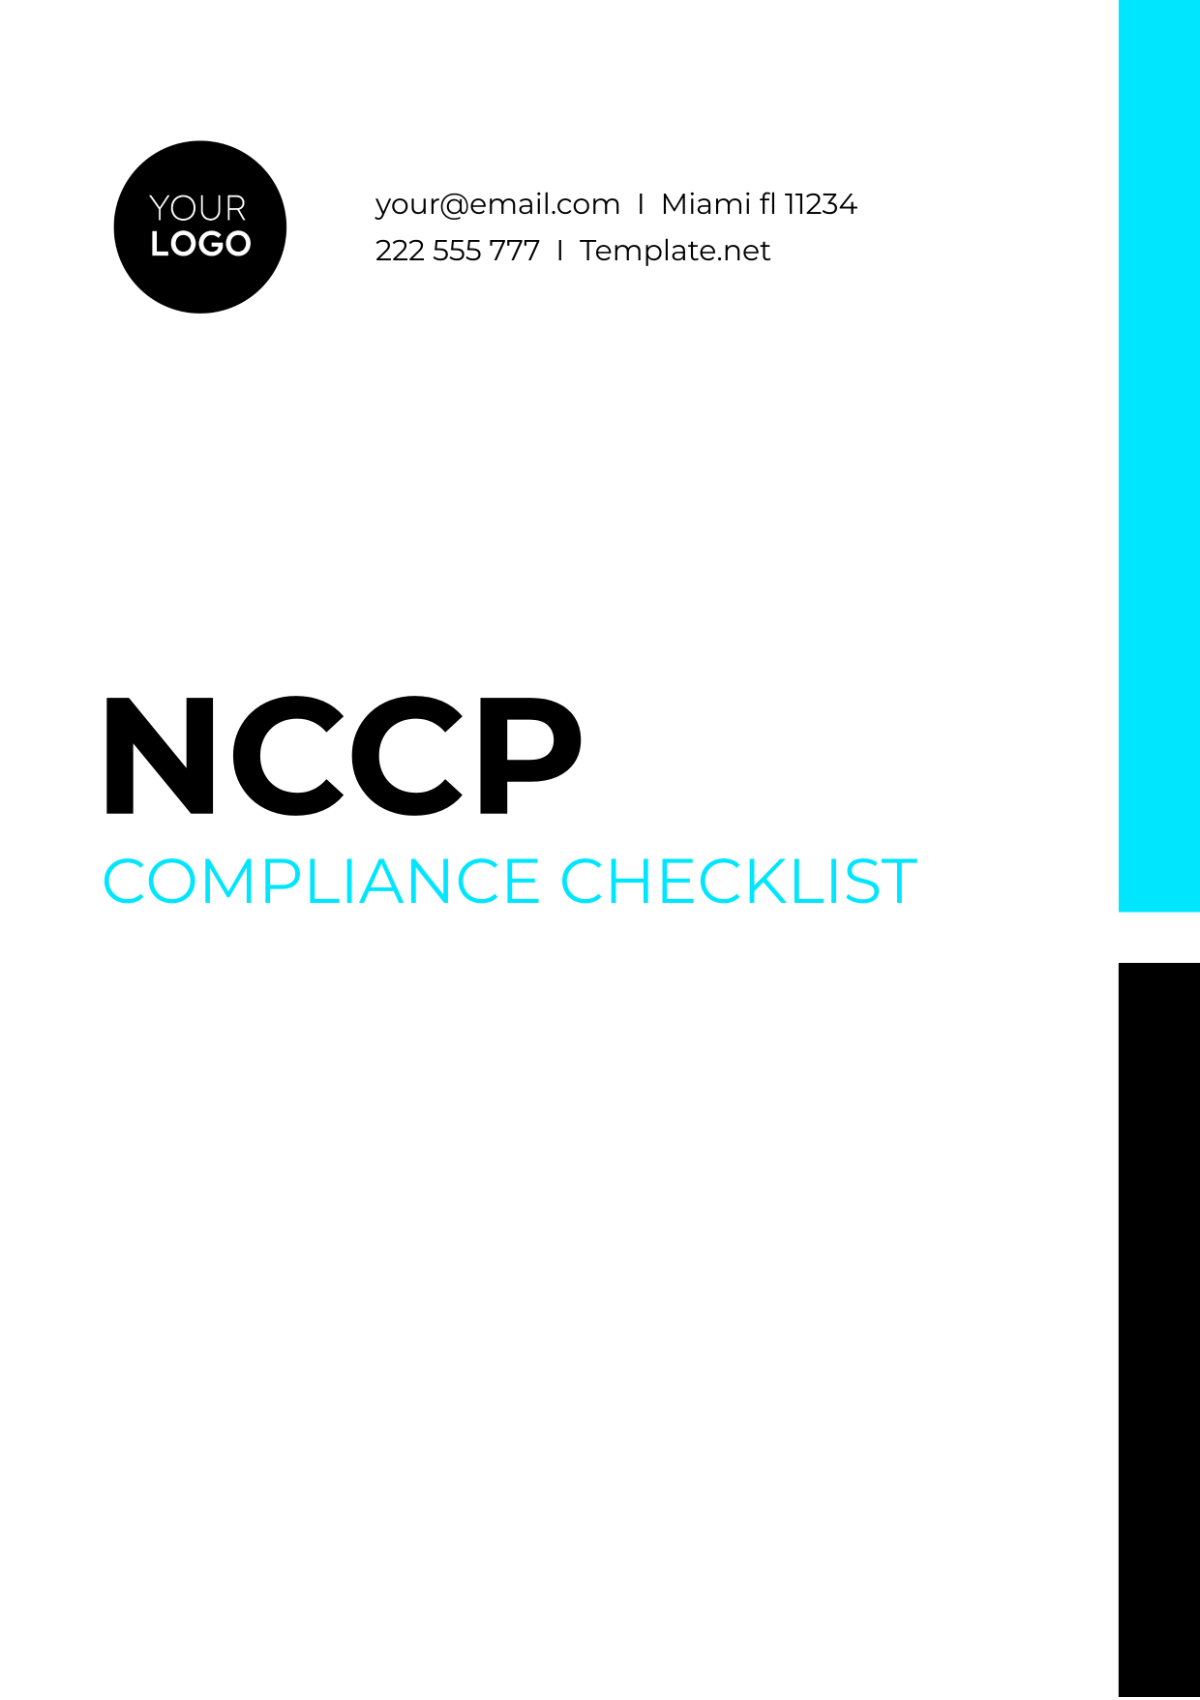 NCCP Compliance Checklist Template